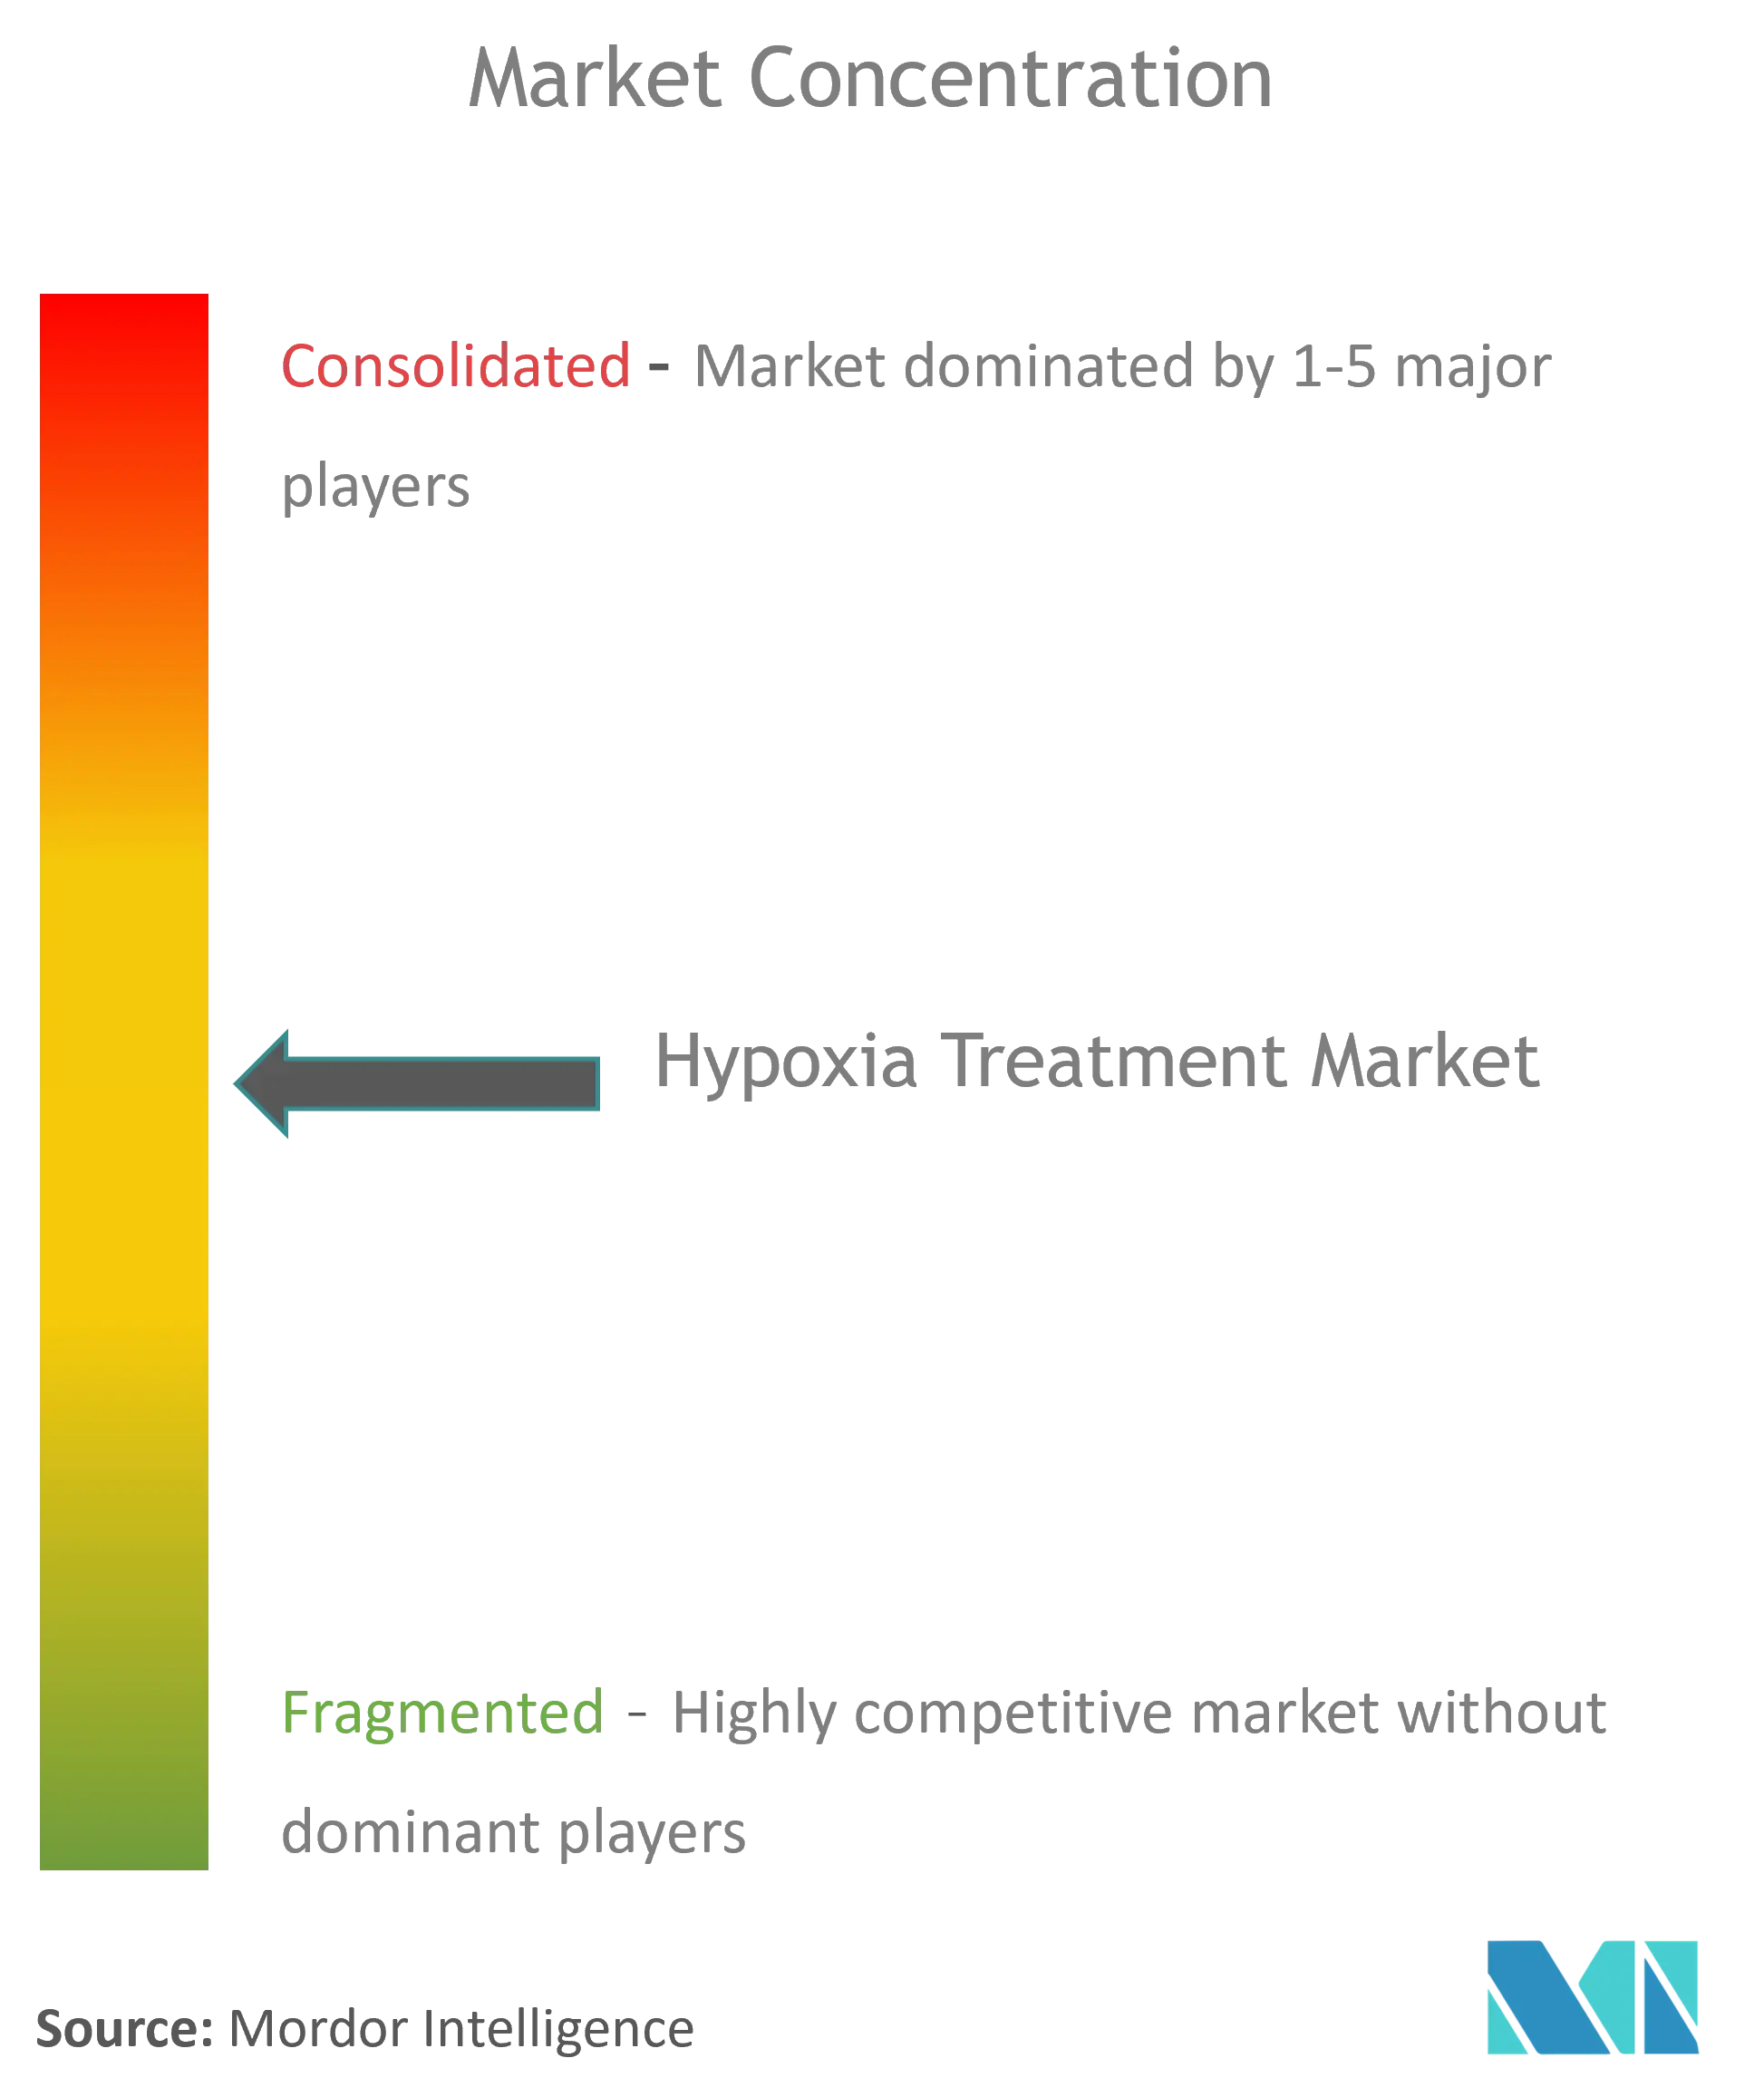 Hypoxia Treatment Market Concentration